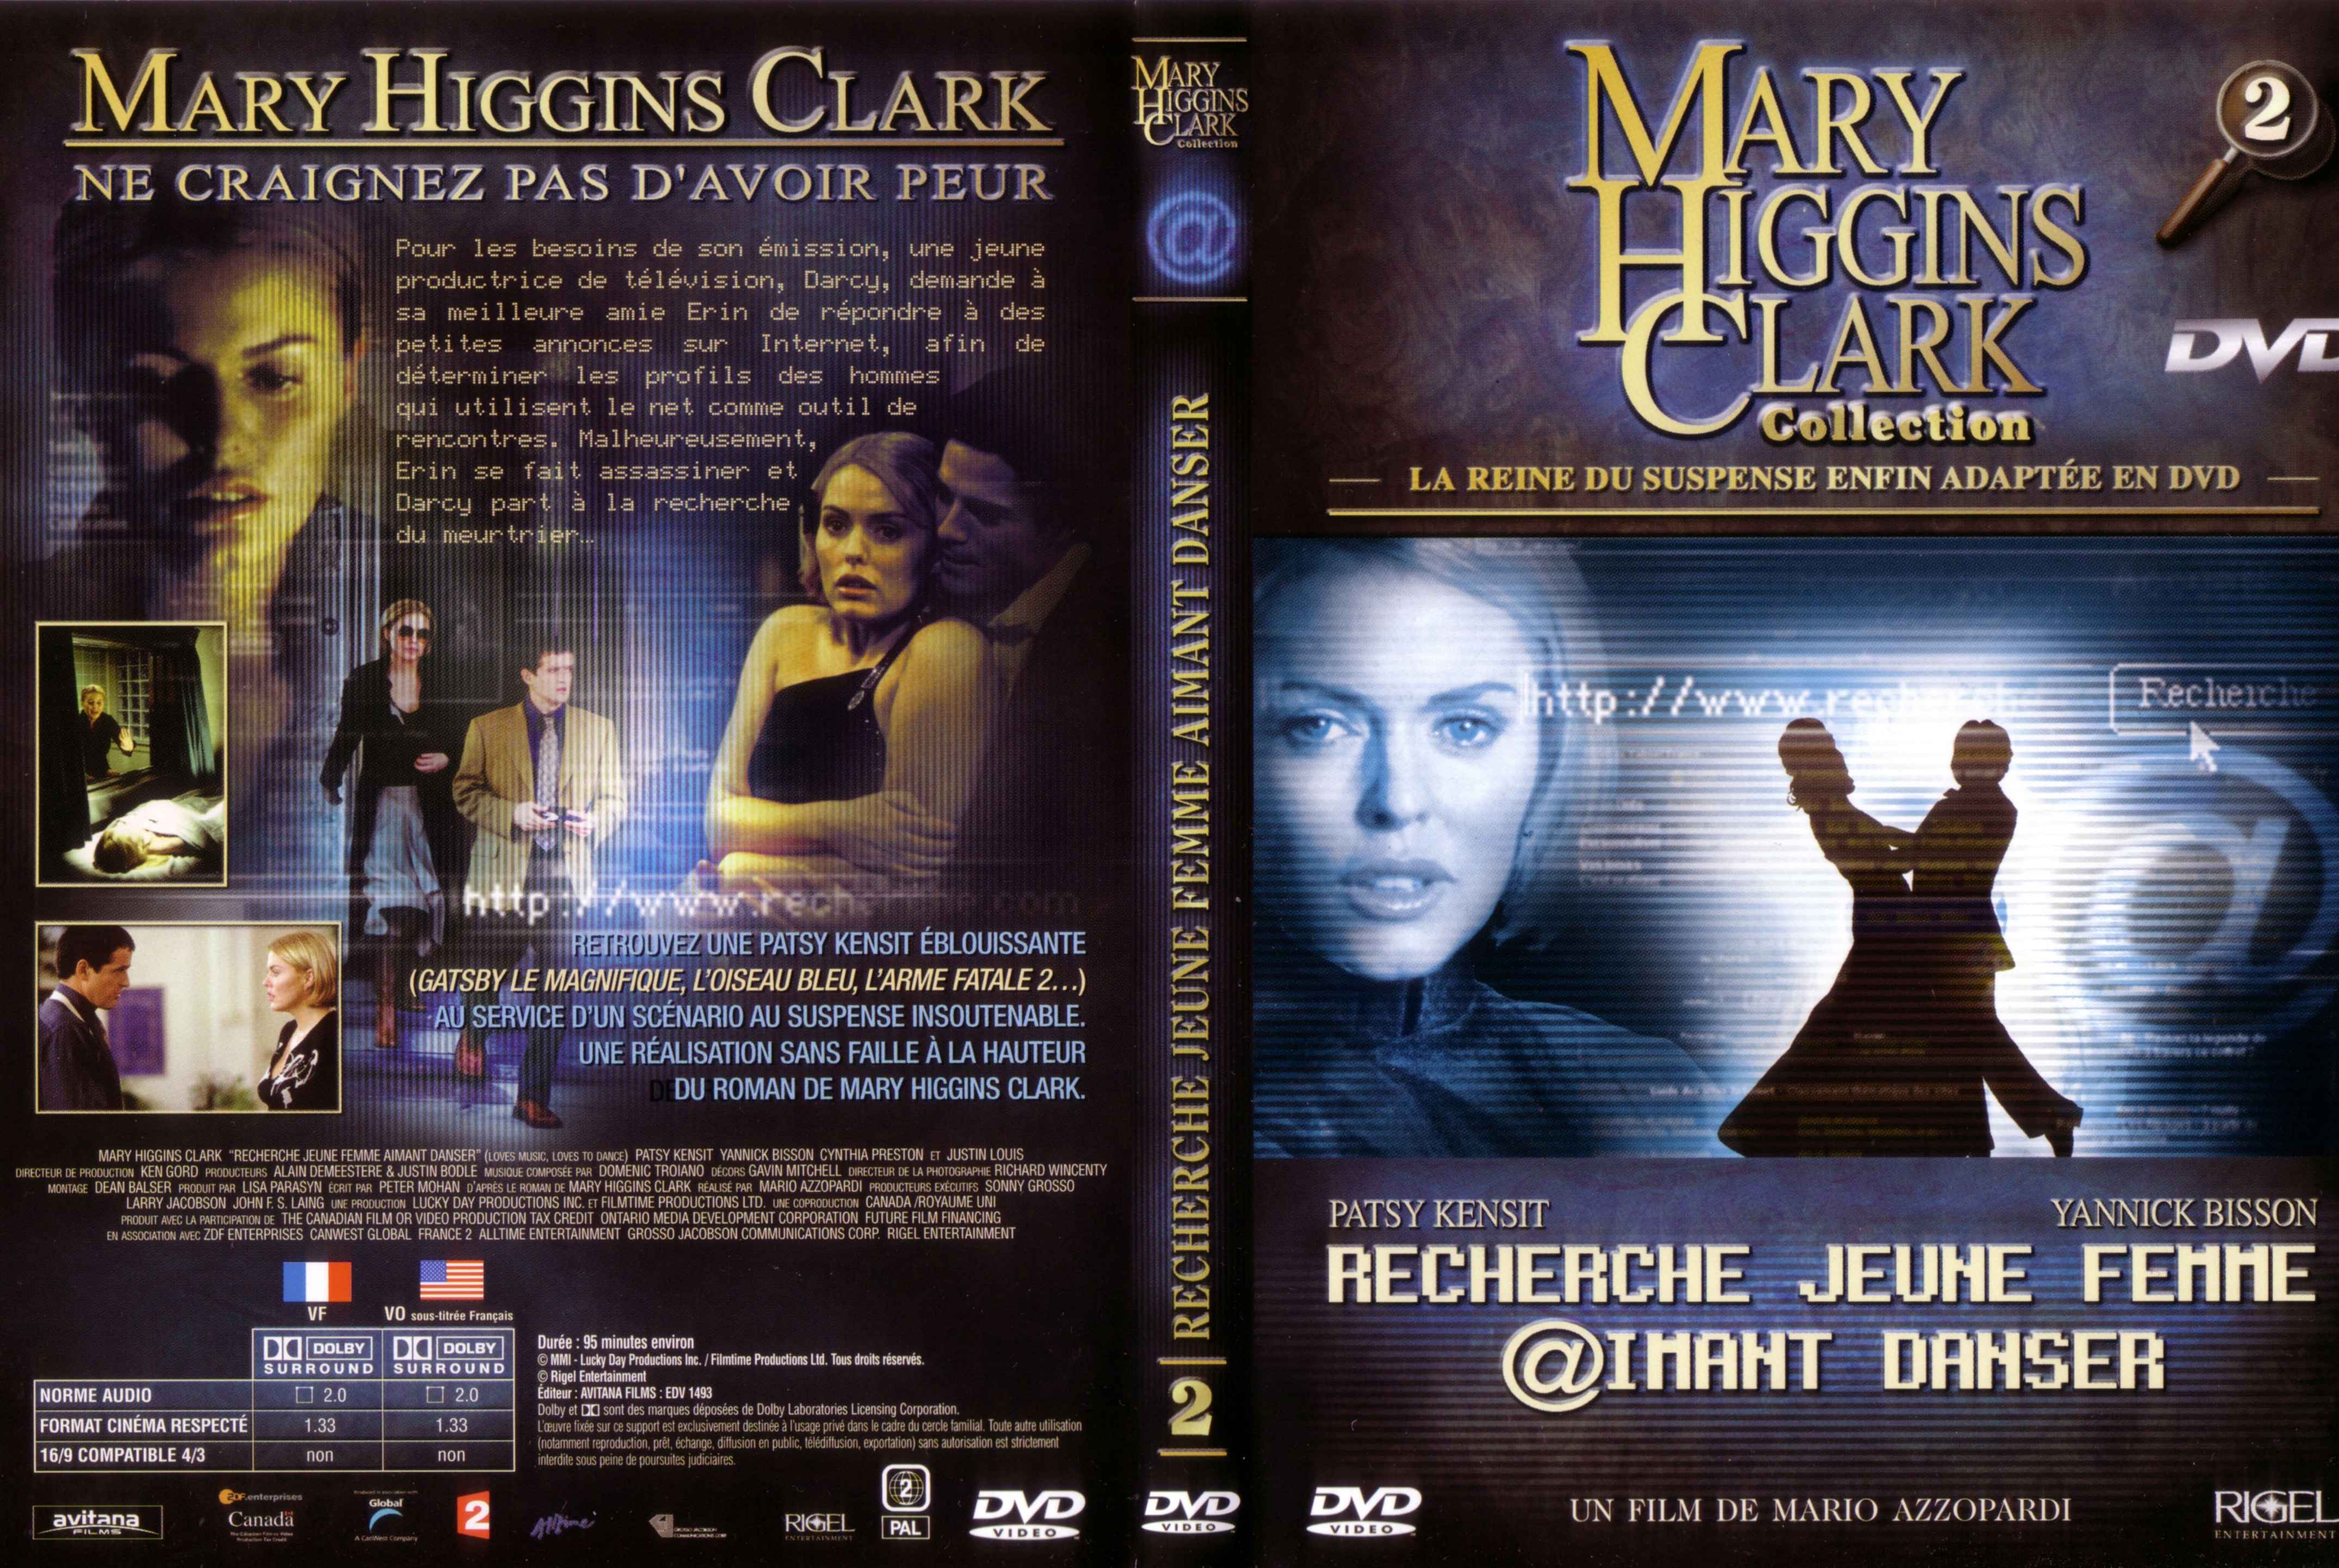 Jaquette DVD de Mary Higgins Clark vol 02 - recherche jeune femme @imant danser ...